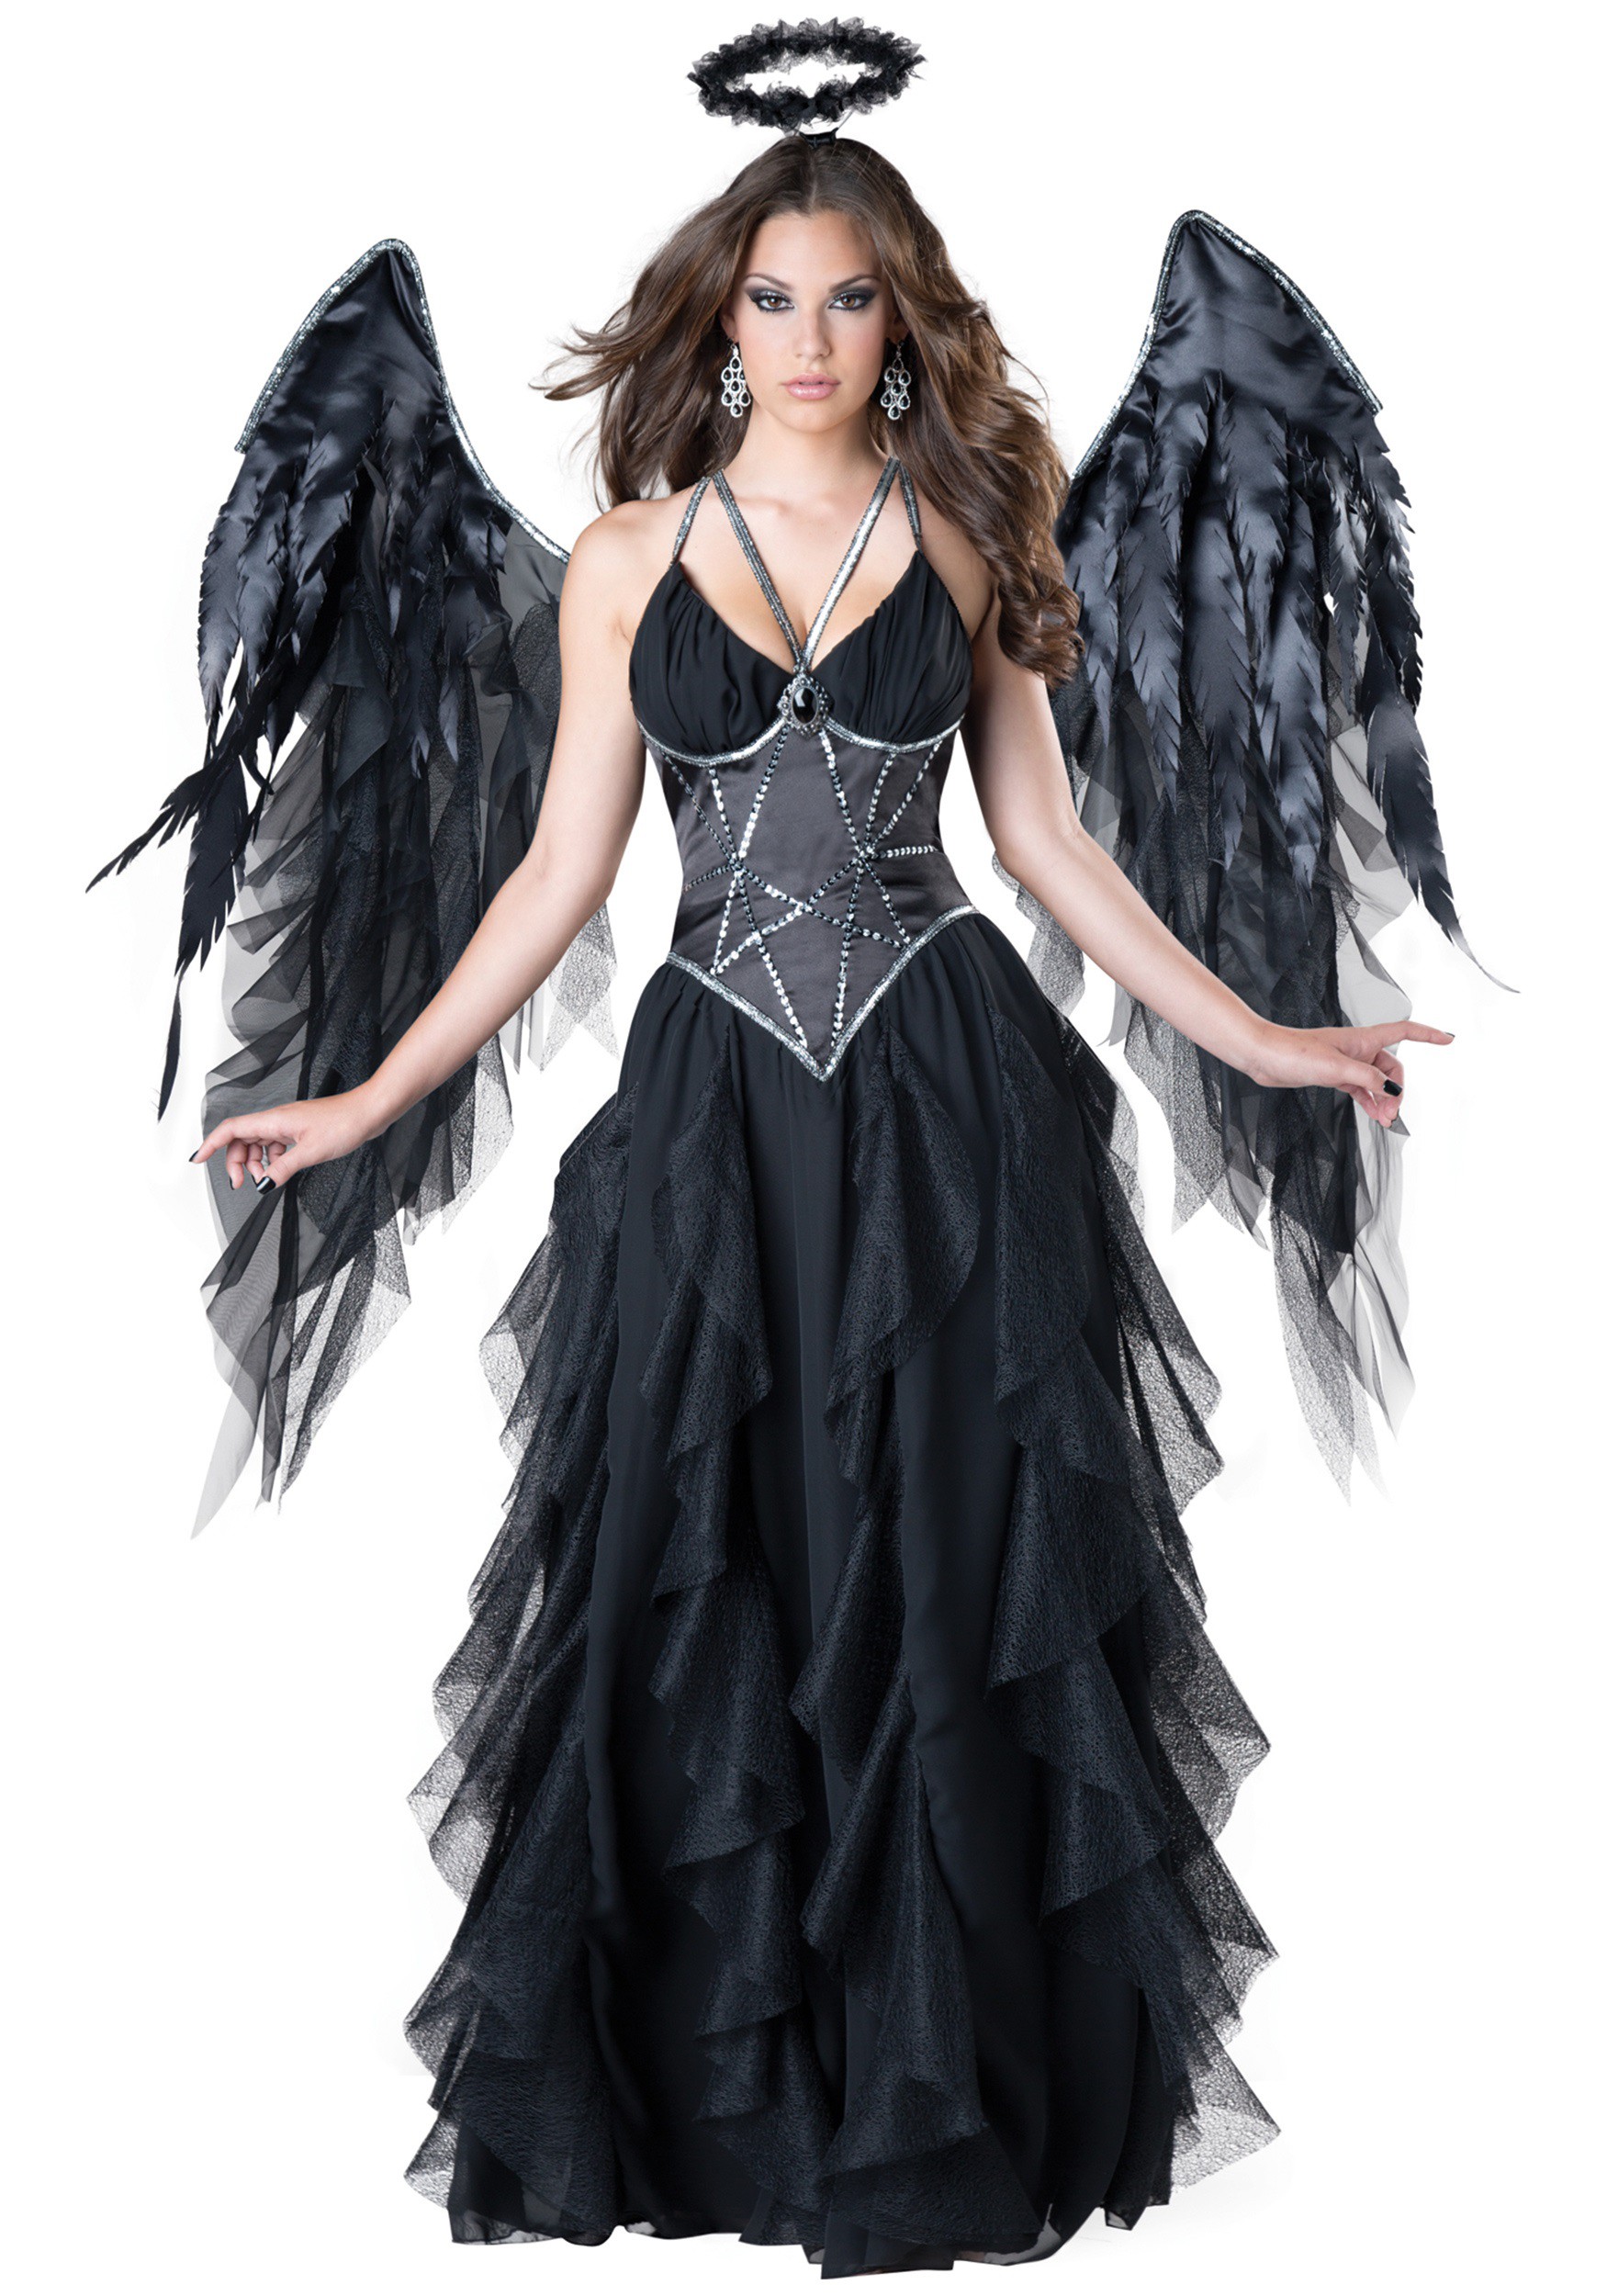 Dark Angel Halloween Costumes For Girls